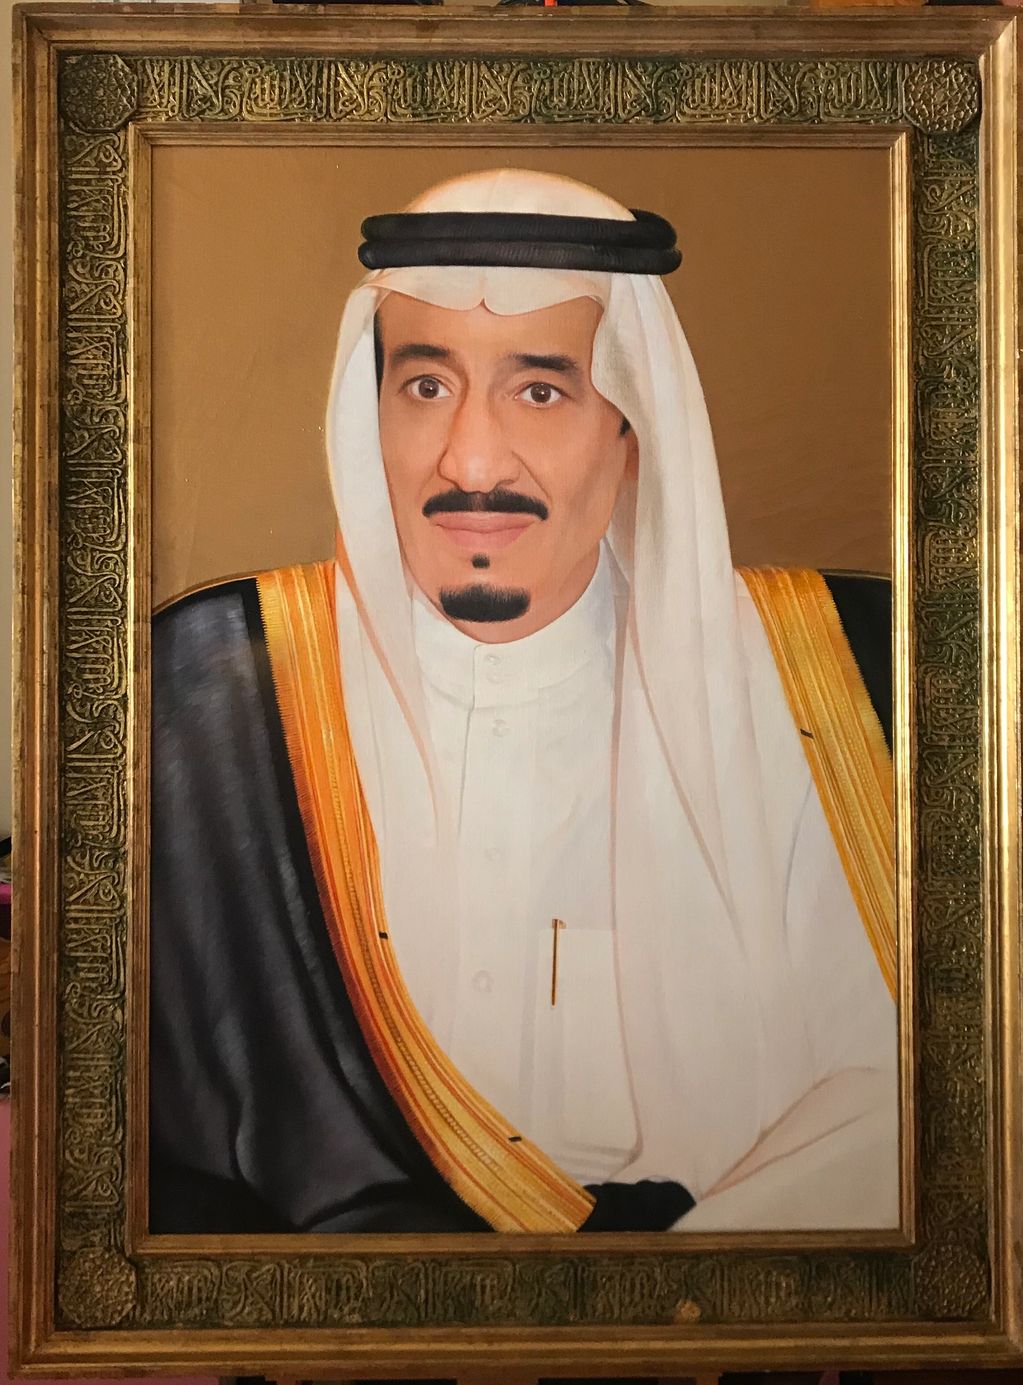 Retrato institucional de su majestad el Rey de Arabia Saudí Salman Bin Abdulaziz